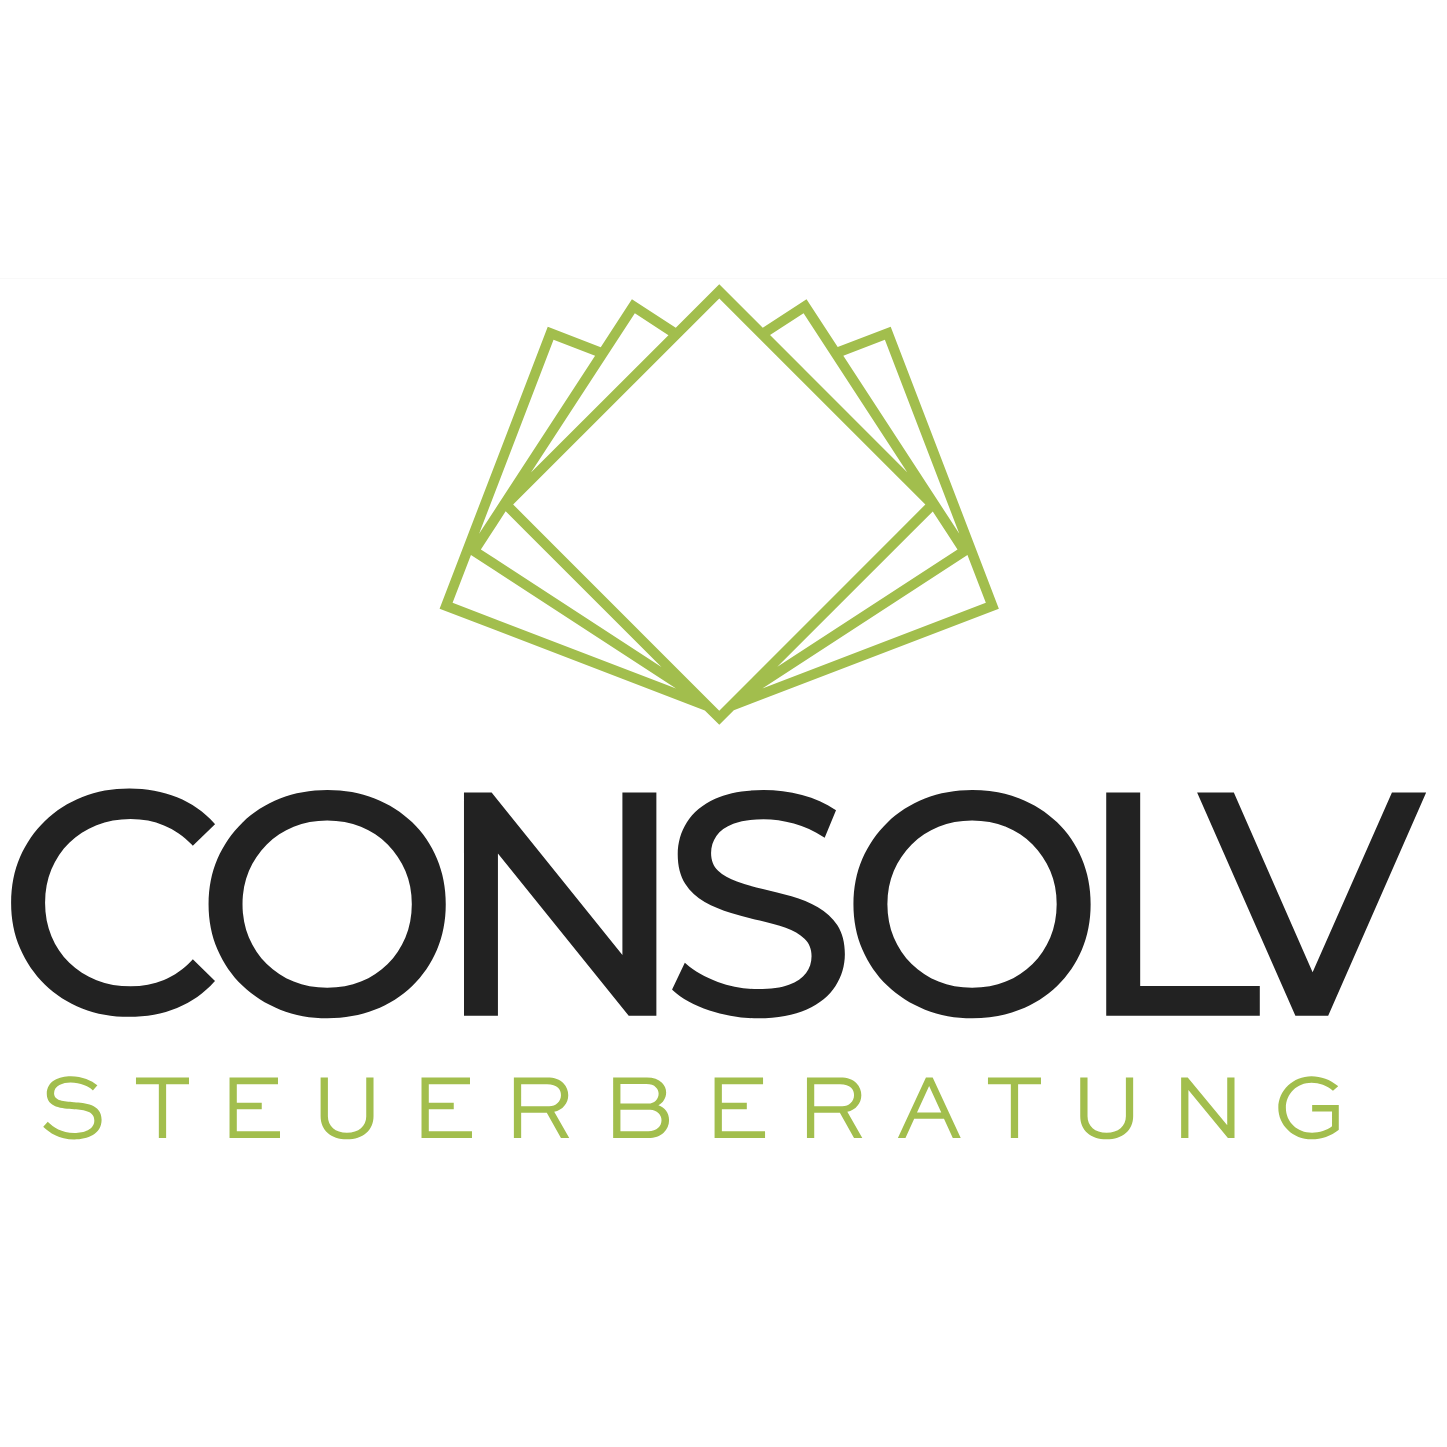 CONSOLV Steuerberatung – Dorn & Partner GmbH Logo